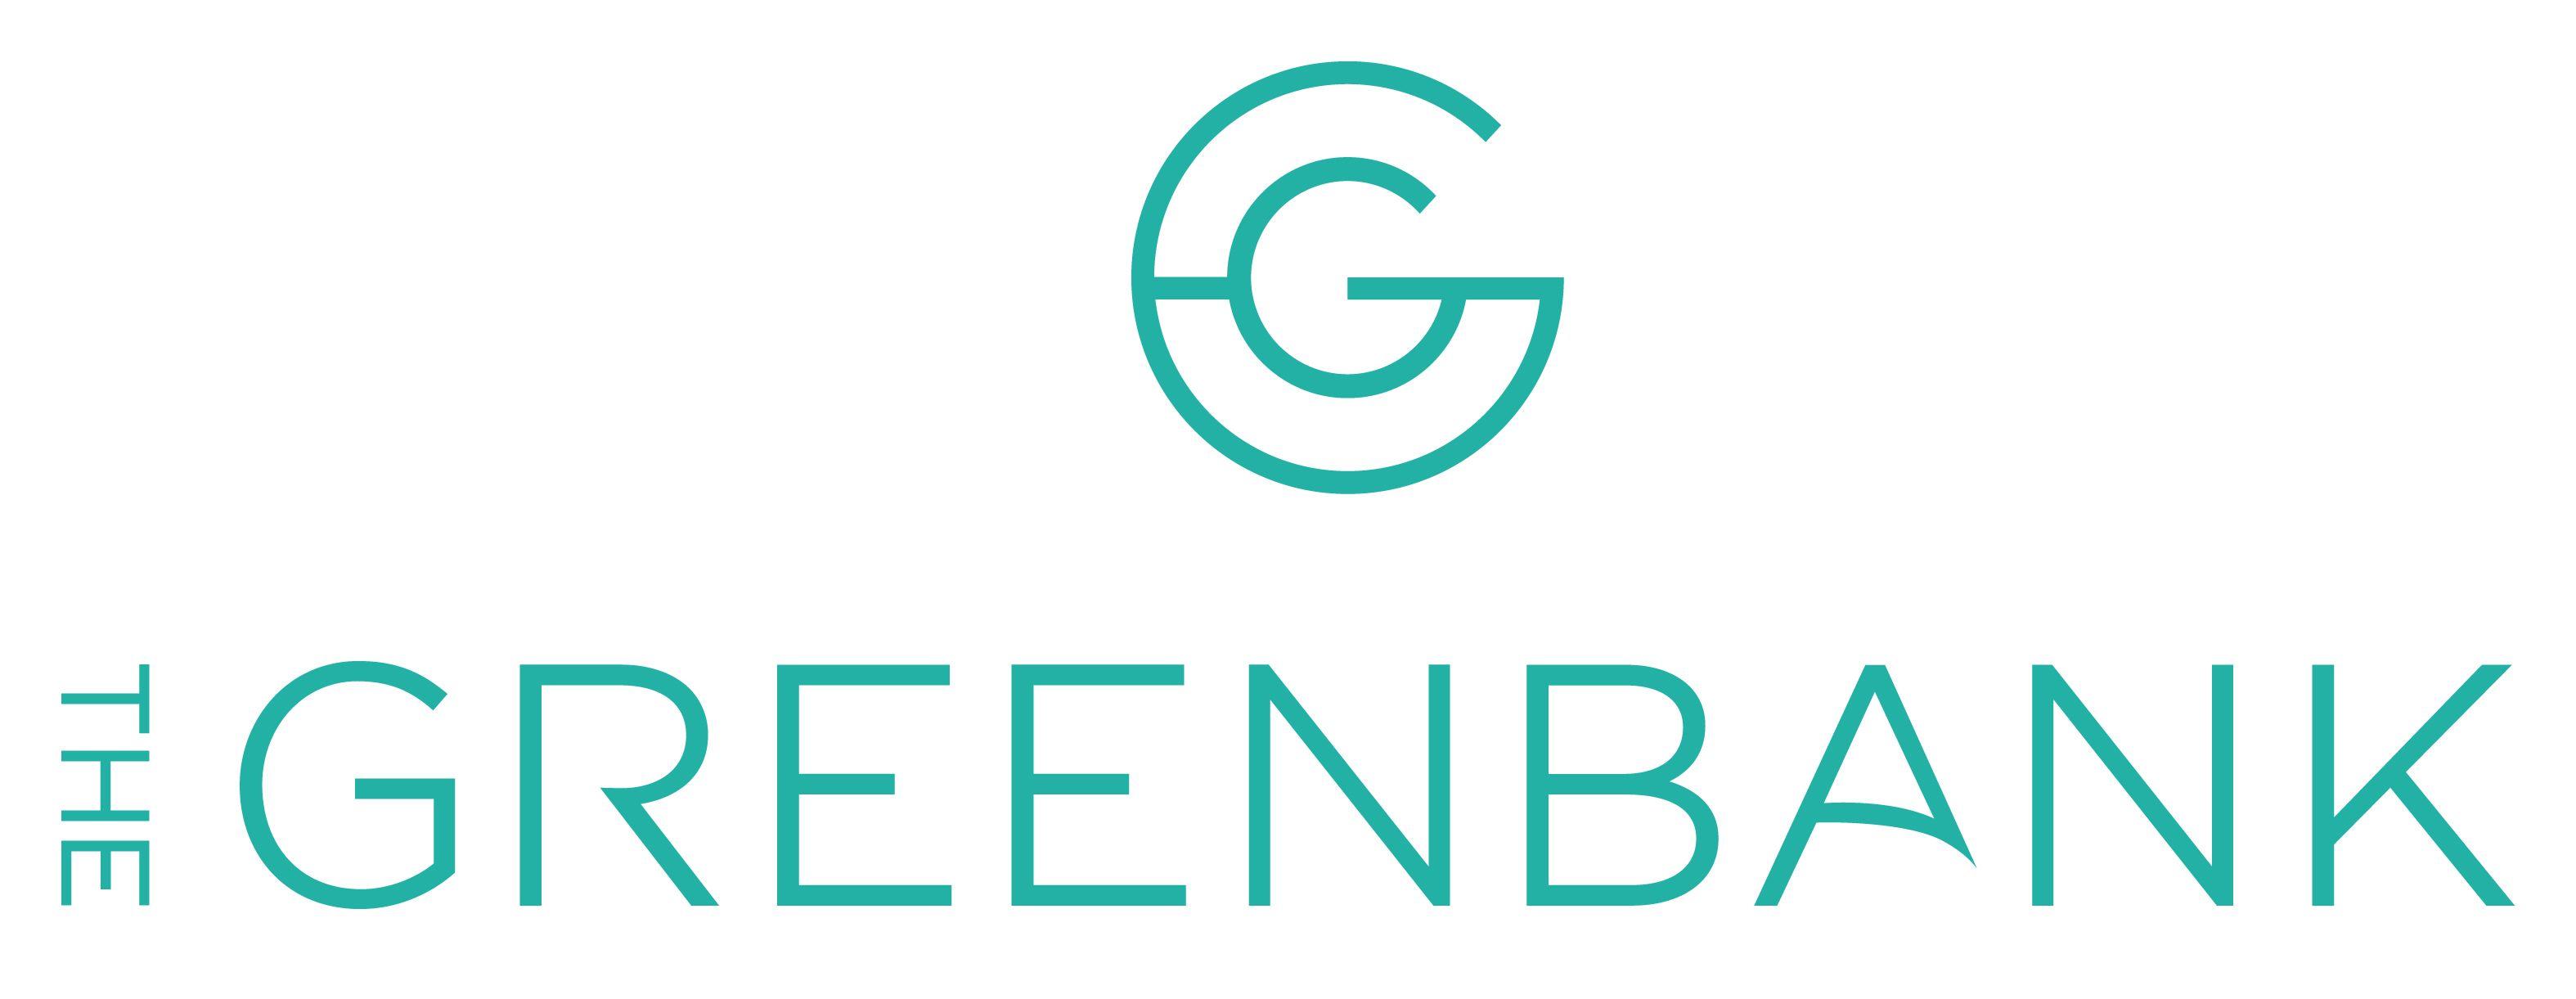 Green Bank Logo - The Greenbank Hotel - The Samphire Club